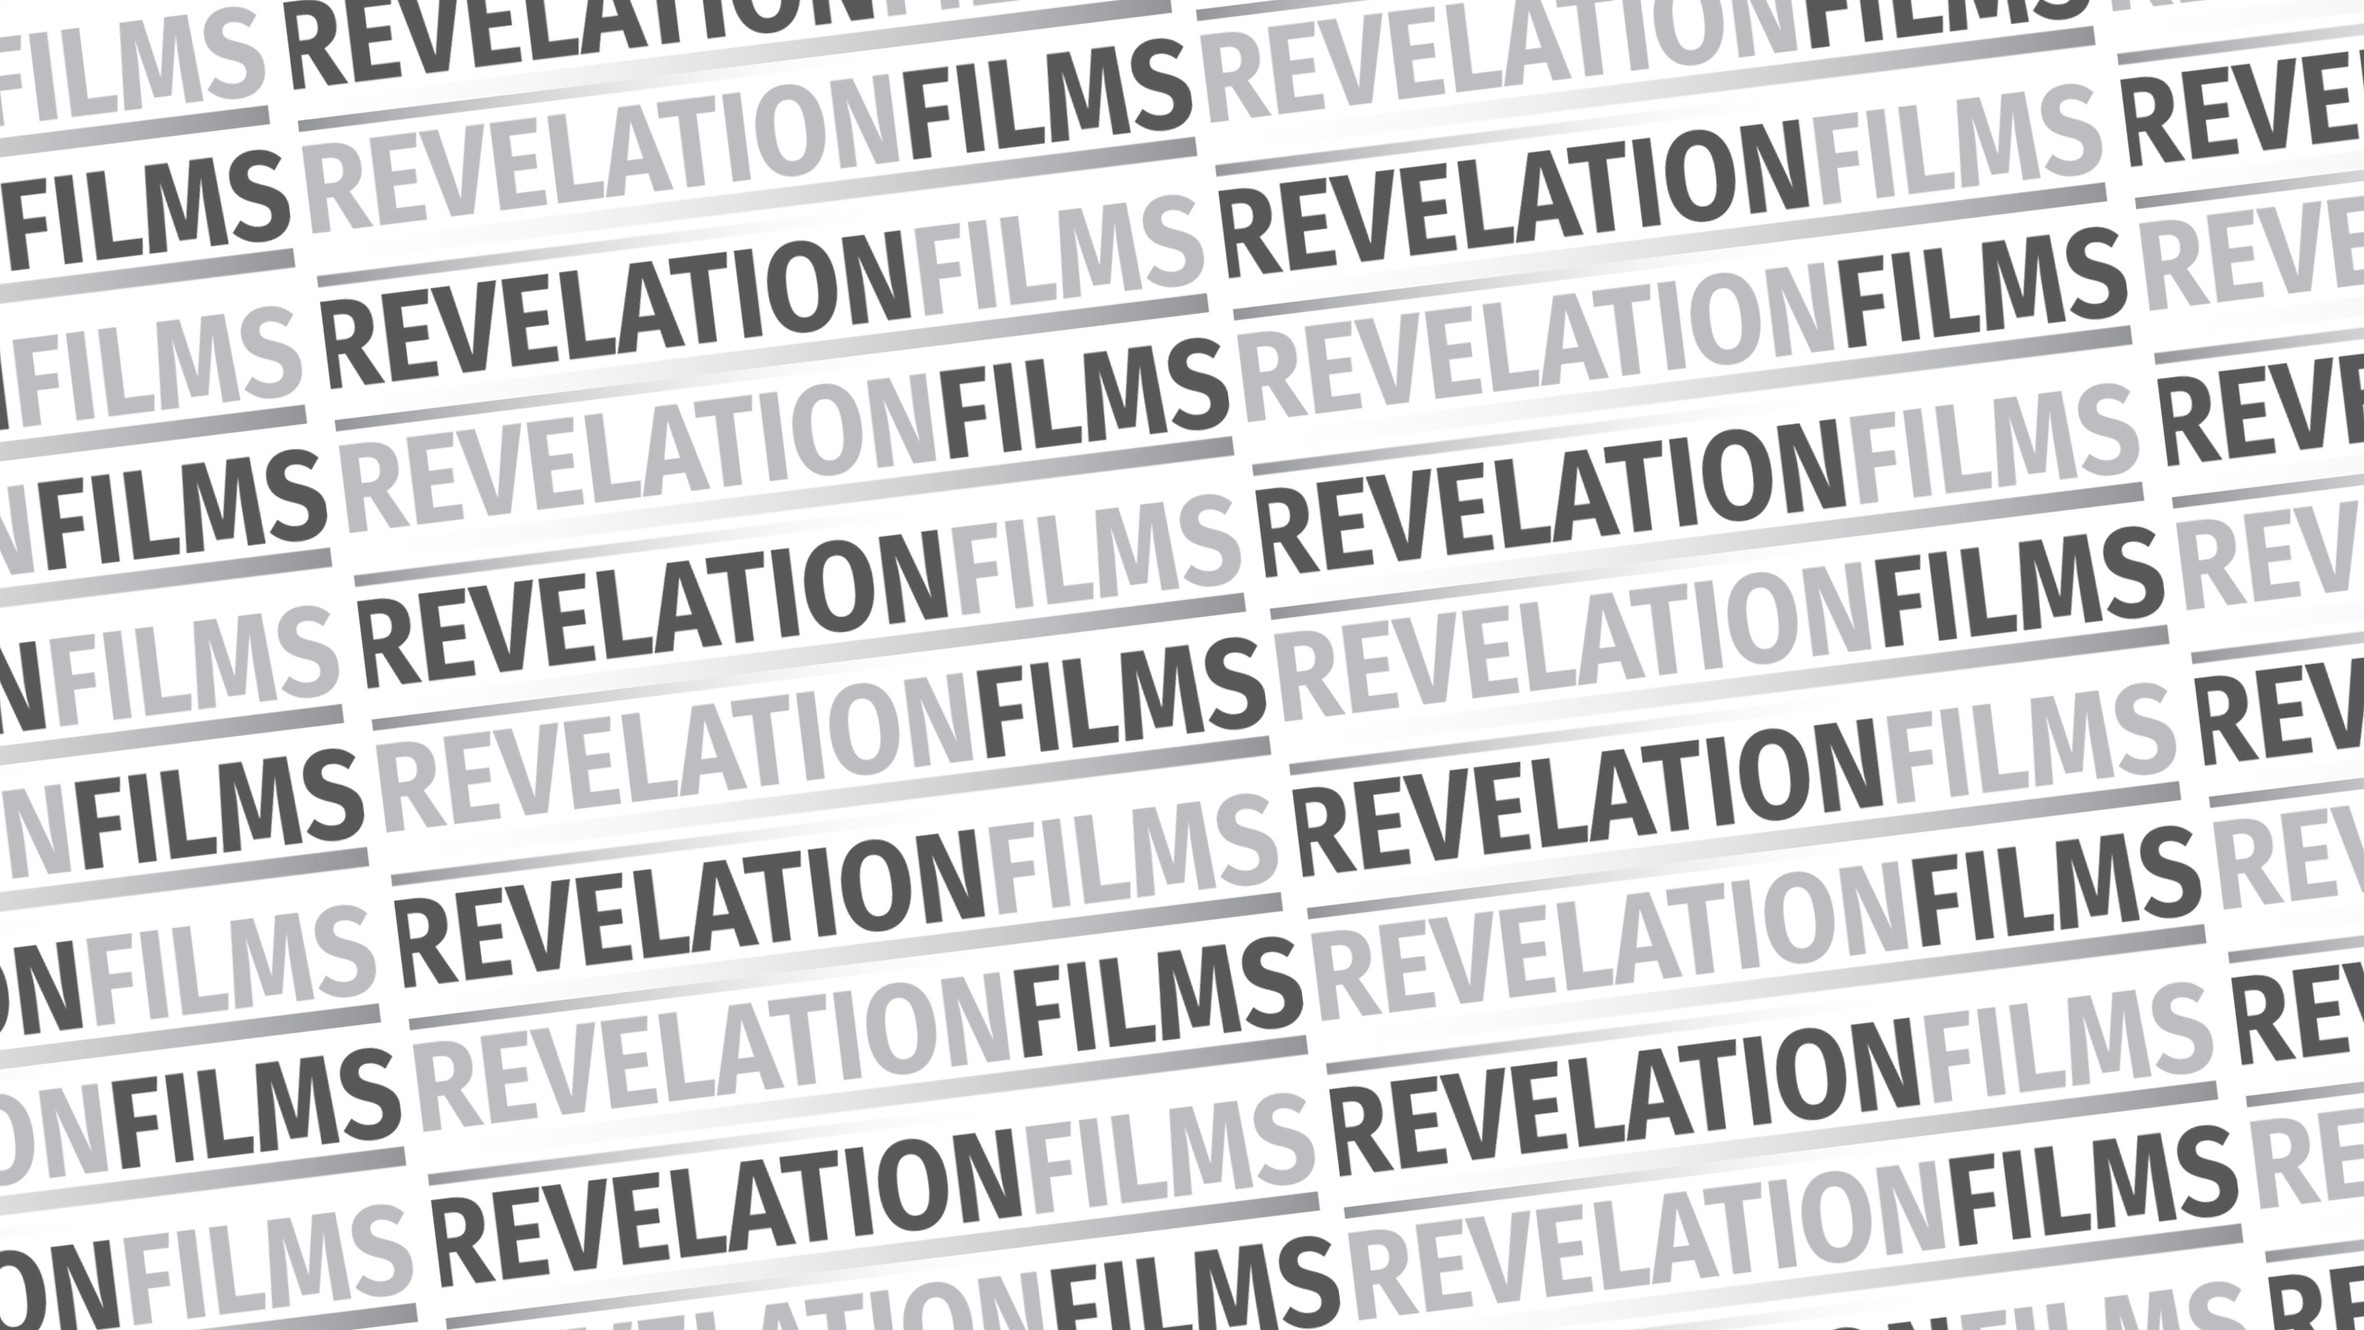 www.revelationfilms.co.uk